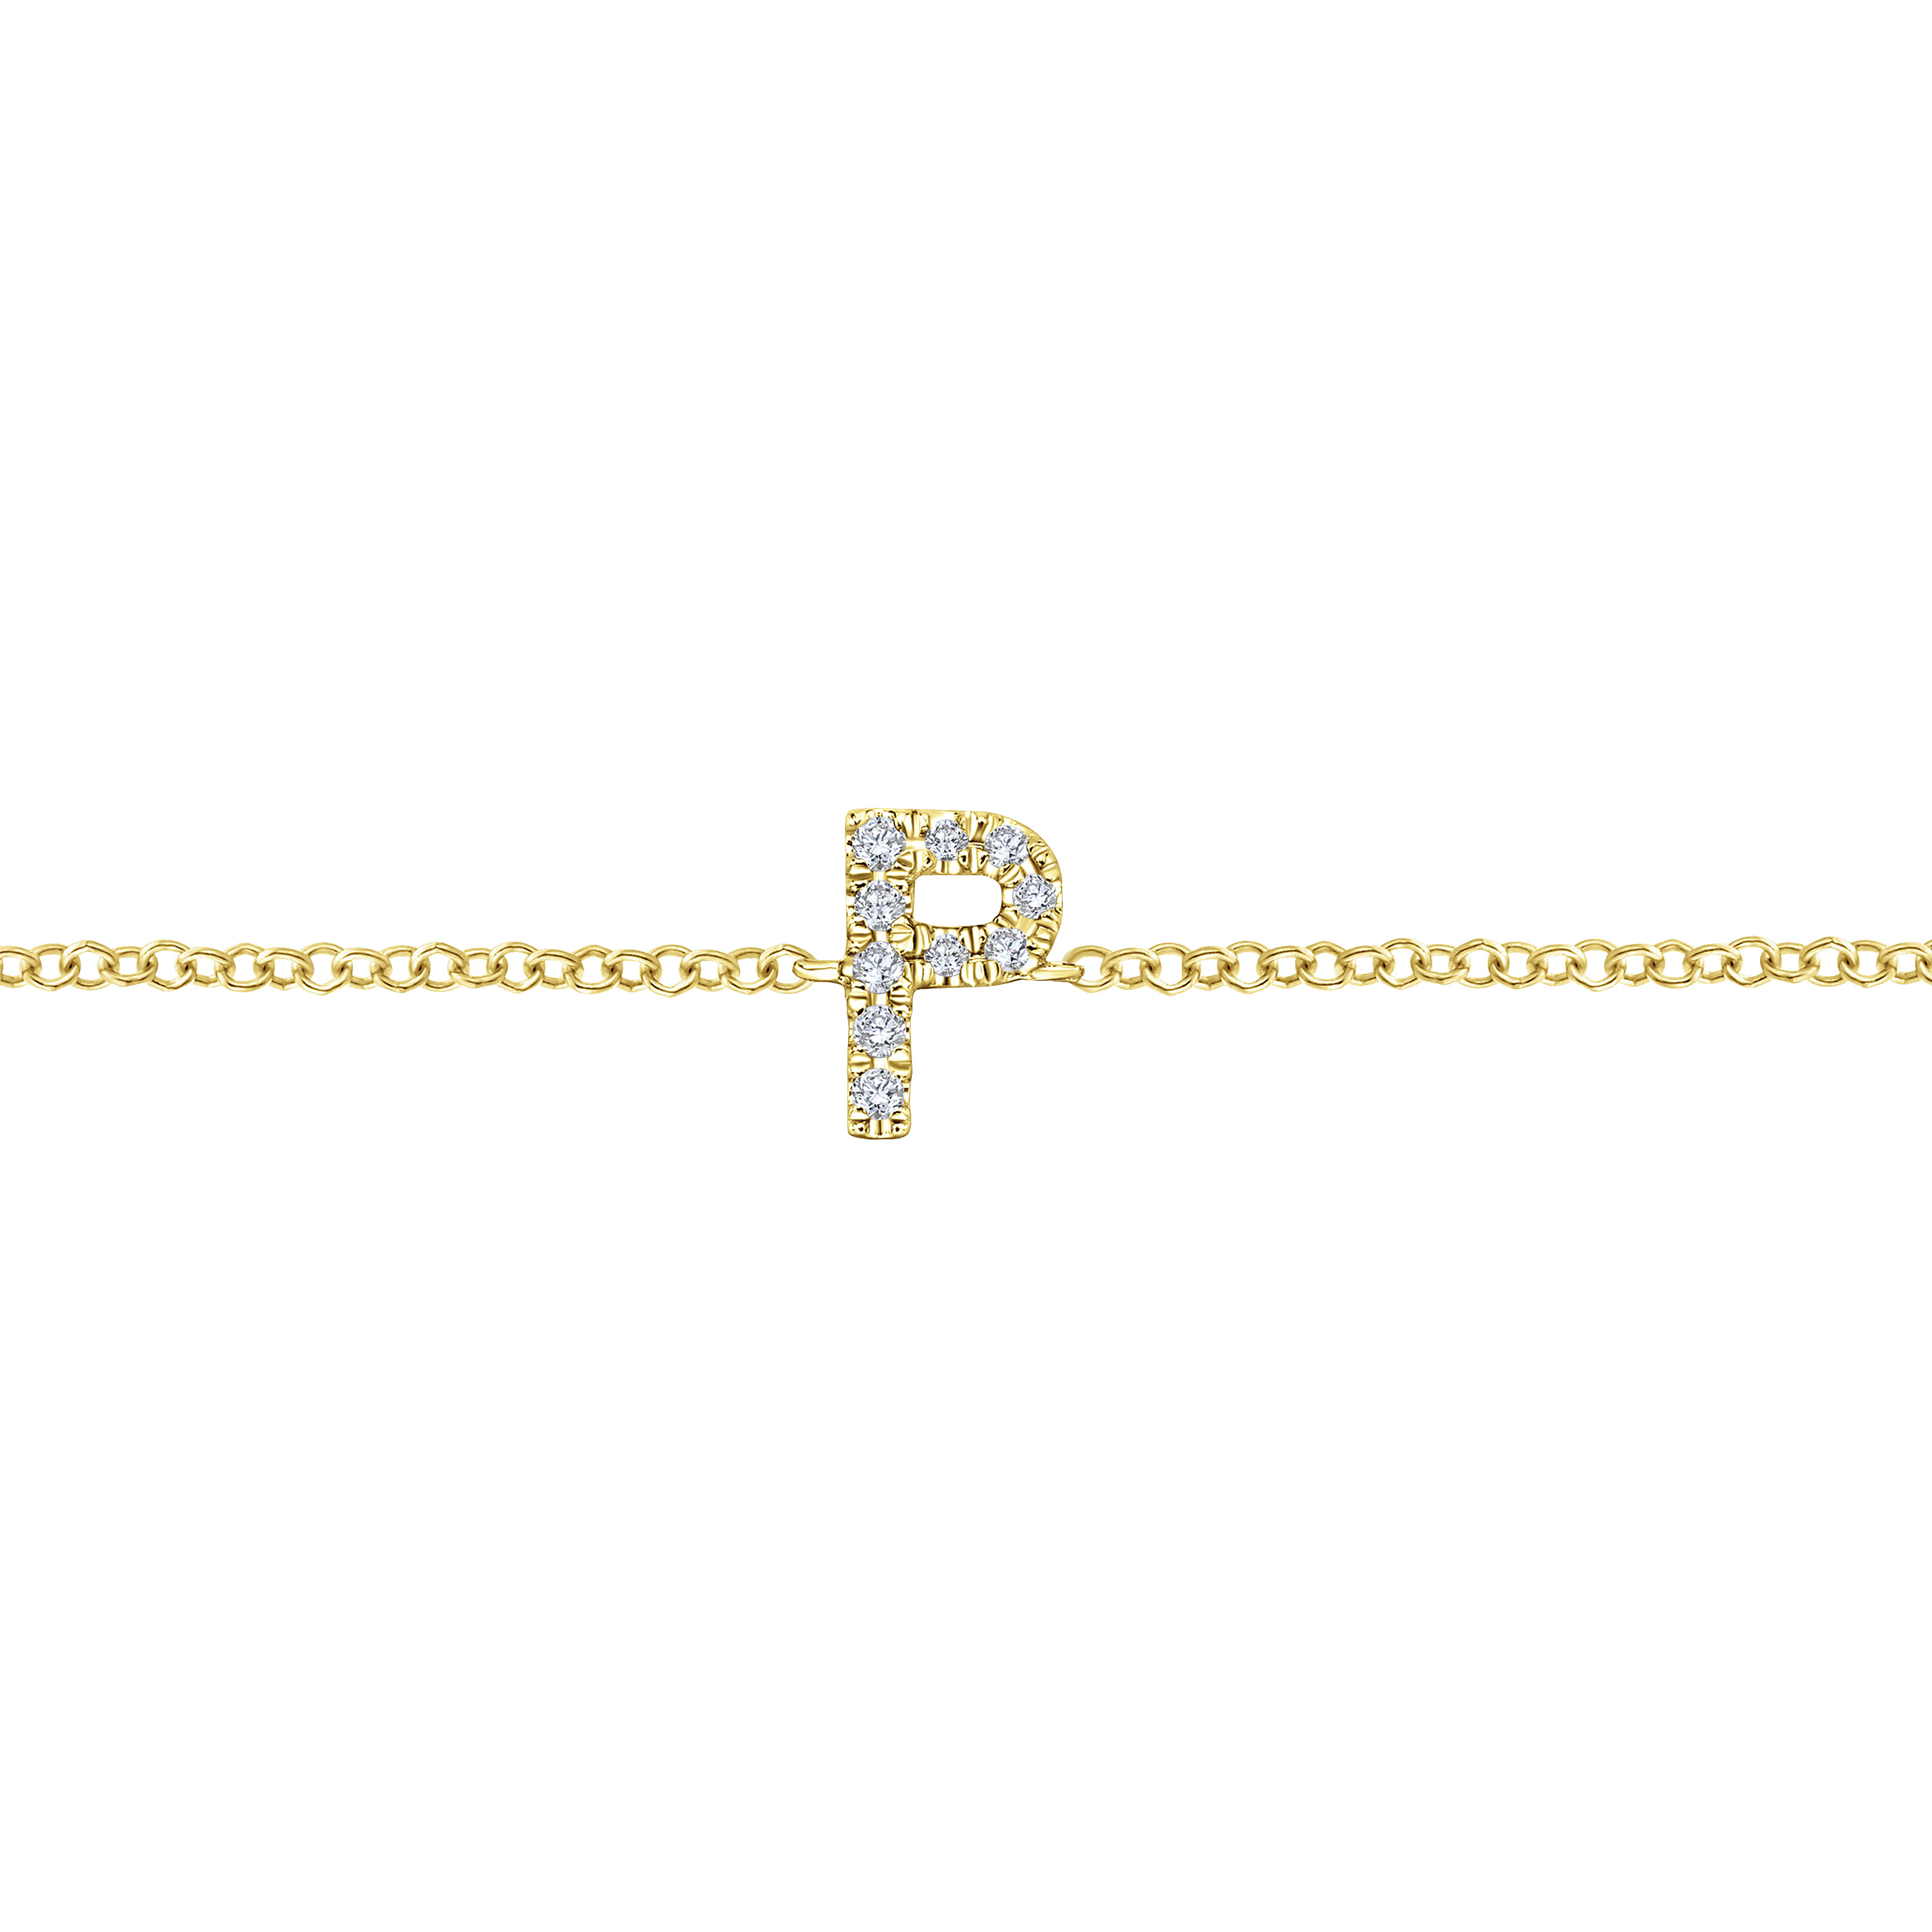 14K Yellow Gold Chain Bracelet with P Diamond Initial